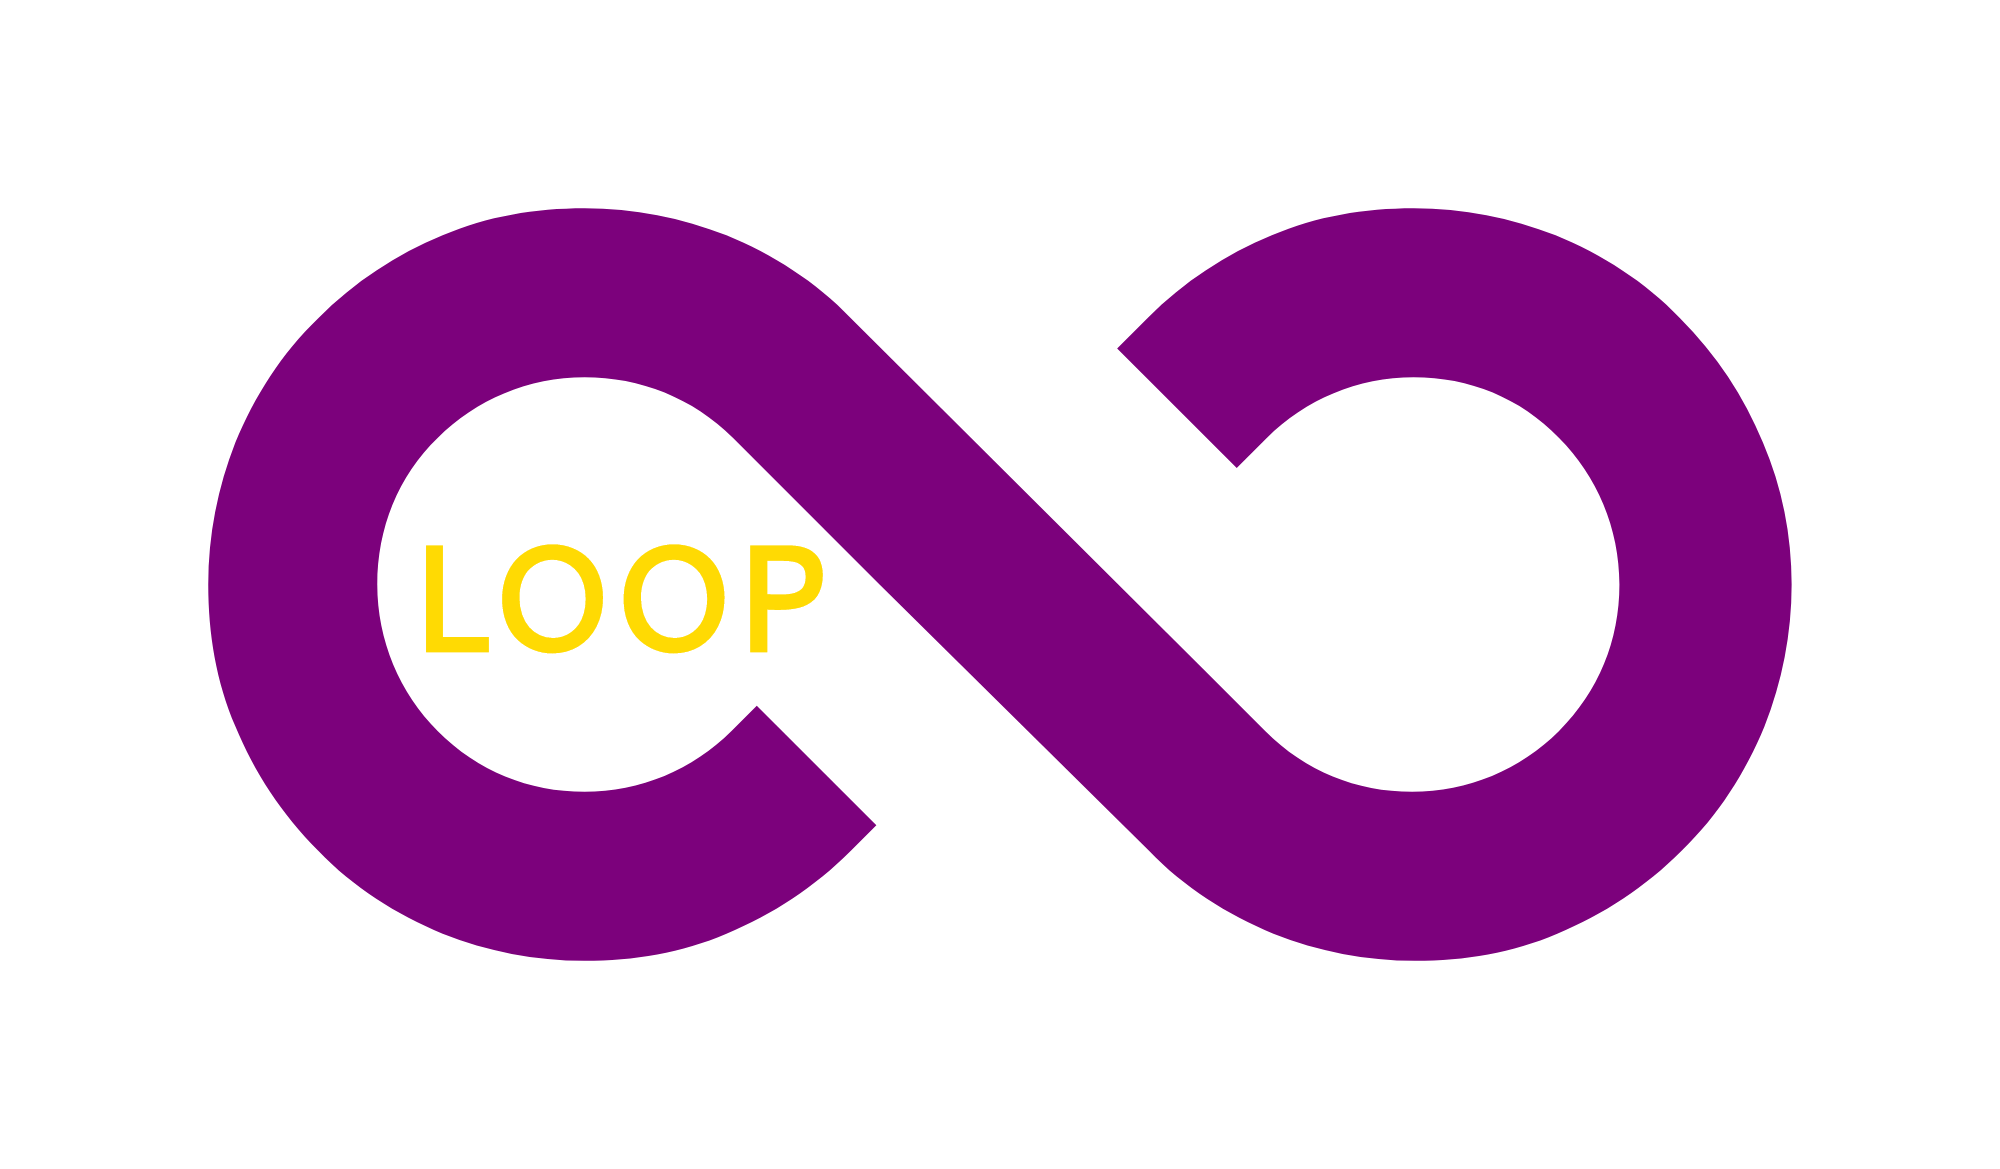 LOOP (Copy)